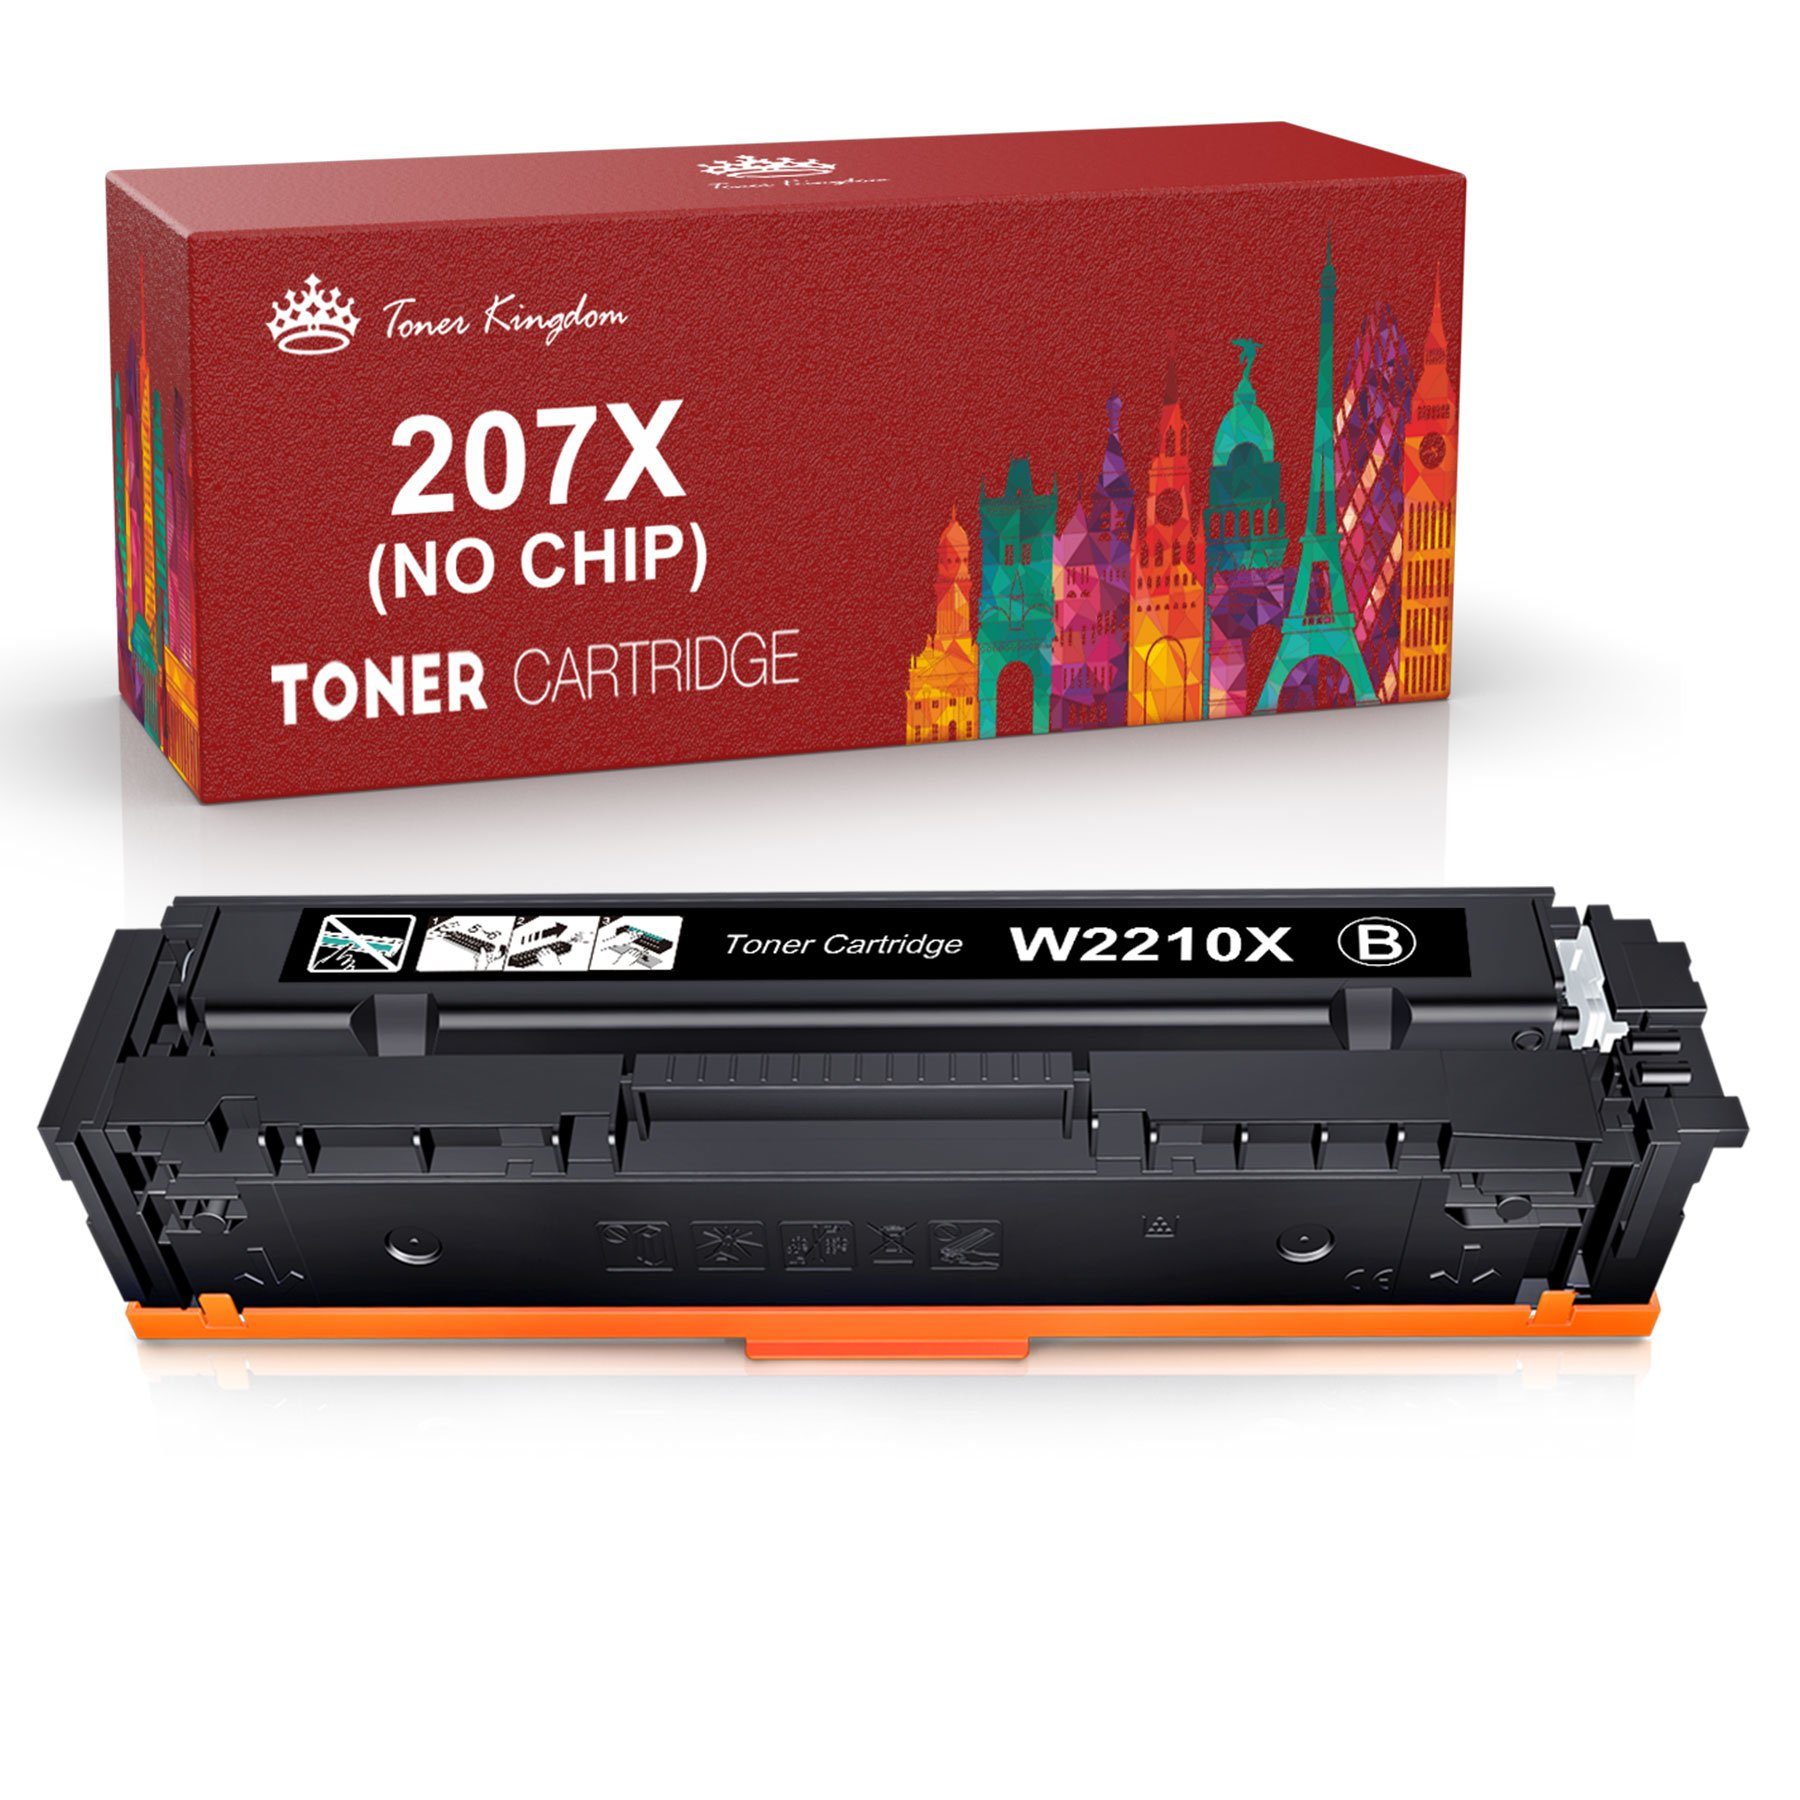 Toner Kingdom Tonerpatrone Ohne Chip für HP 207X 207A W2210X W2211X W2212X W2213X, Color Laserjet Pro MFP M283fdw M282nw M283fdn M255dw M255nw